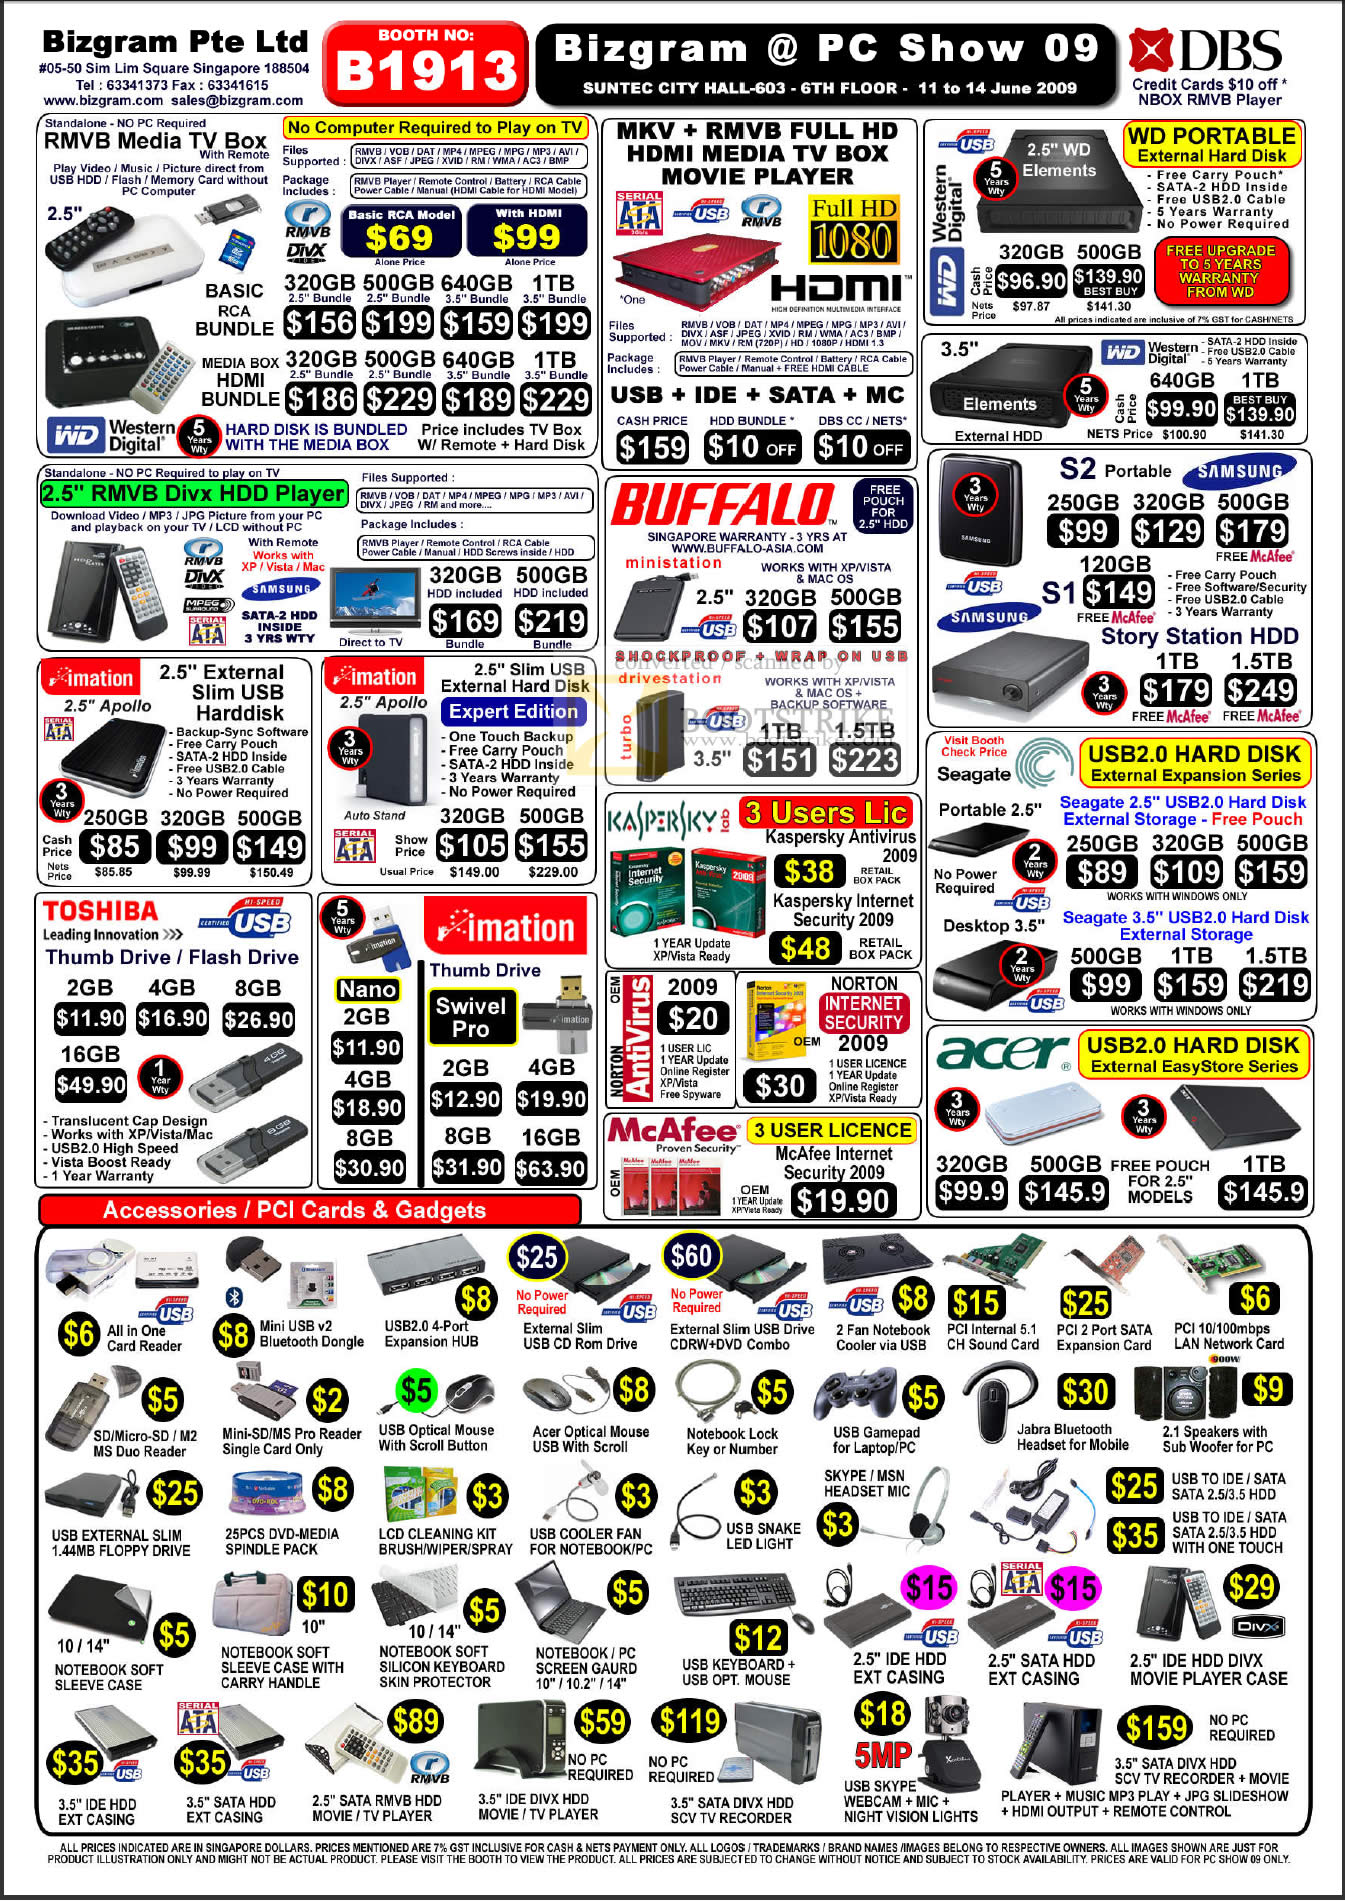 PC Show 2009 price list image brochure of Bizgram Pricelist Page 1